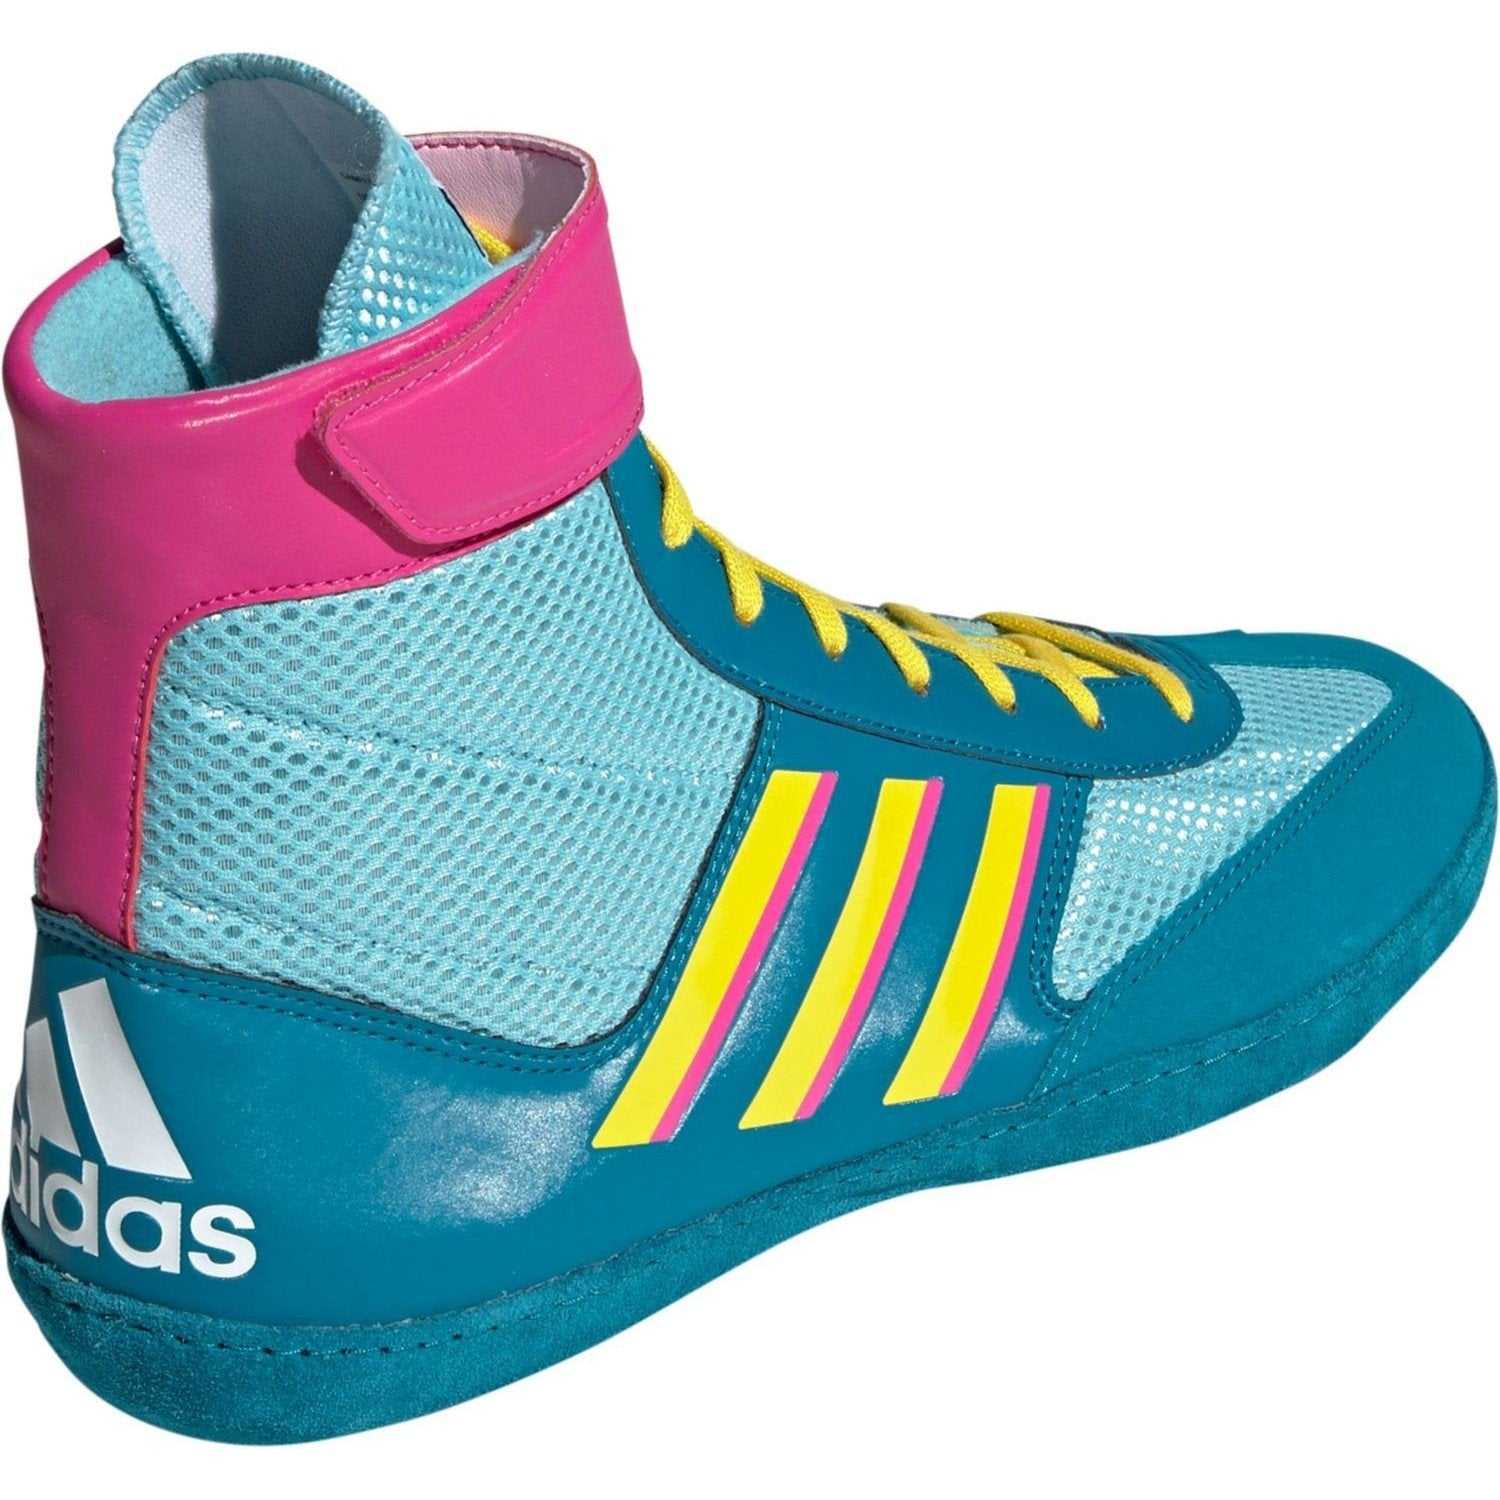 Adidas 224 Combat Wrestling Shoes - Aqua Yellow Teal